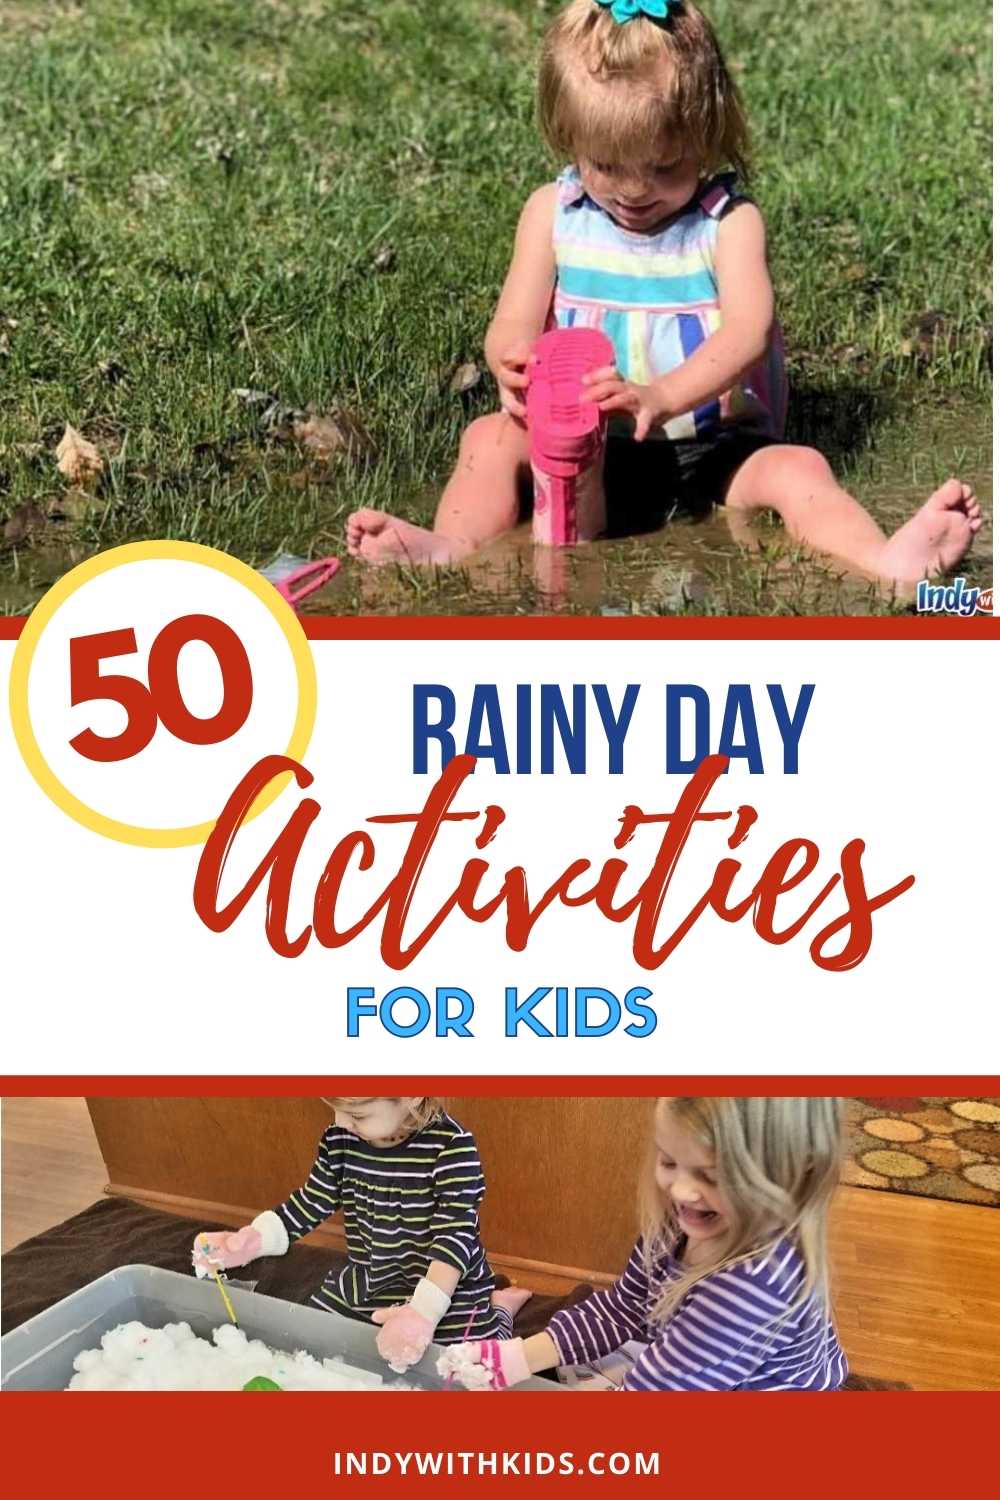 Ten fun rainy day activities to enjoy with your children - MSU Extension